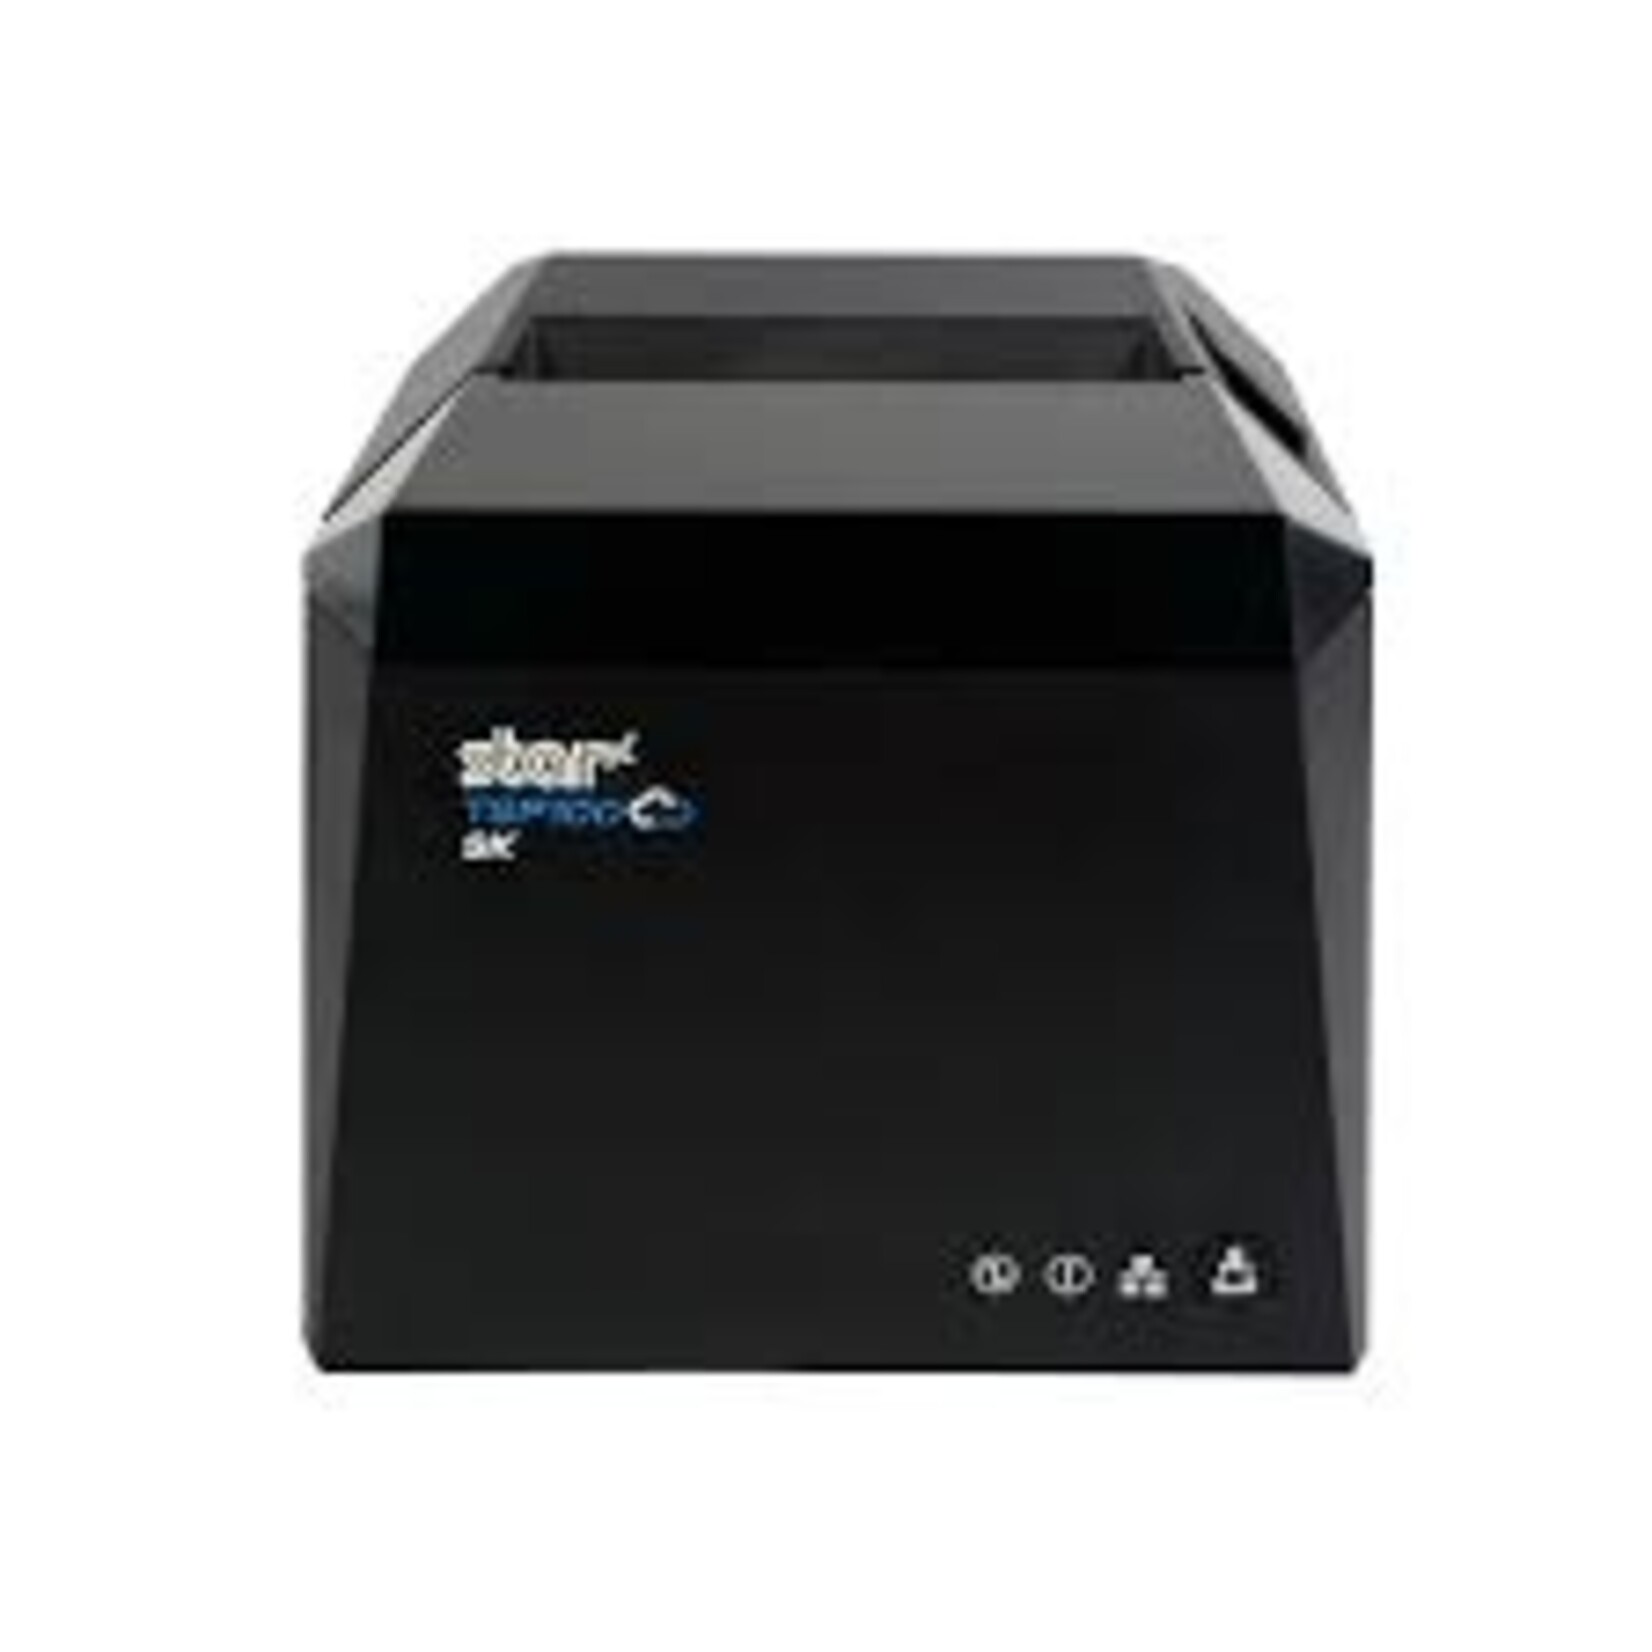 Star kassabon printer TSP143IV